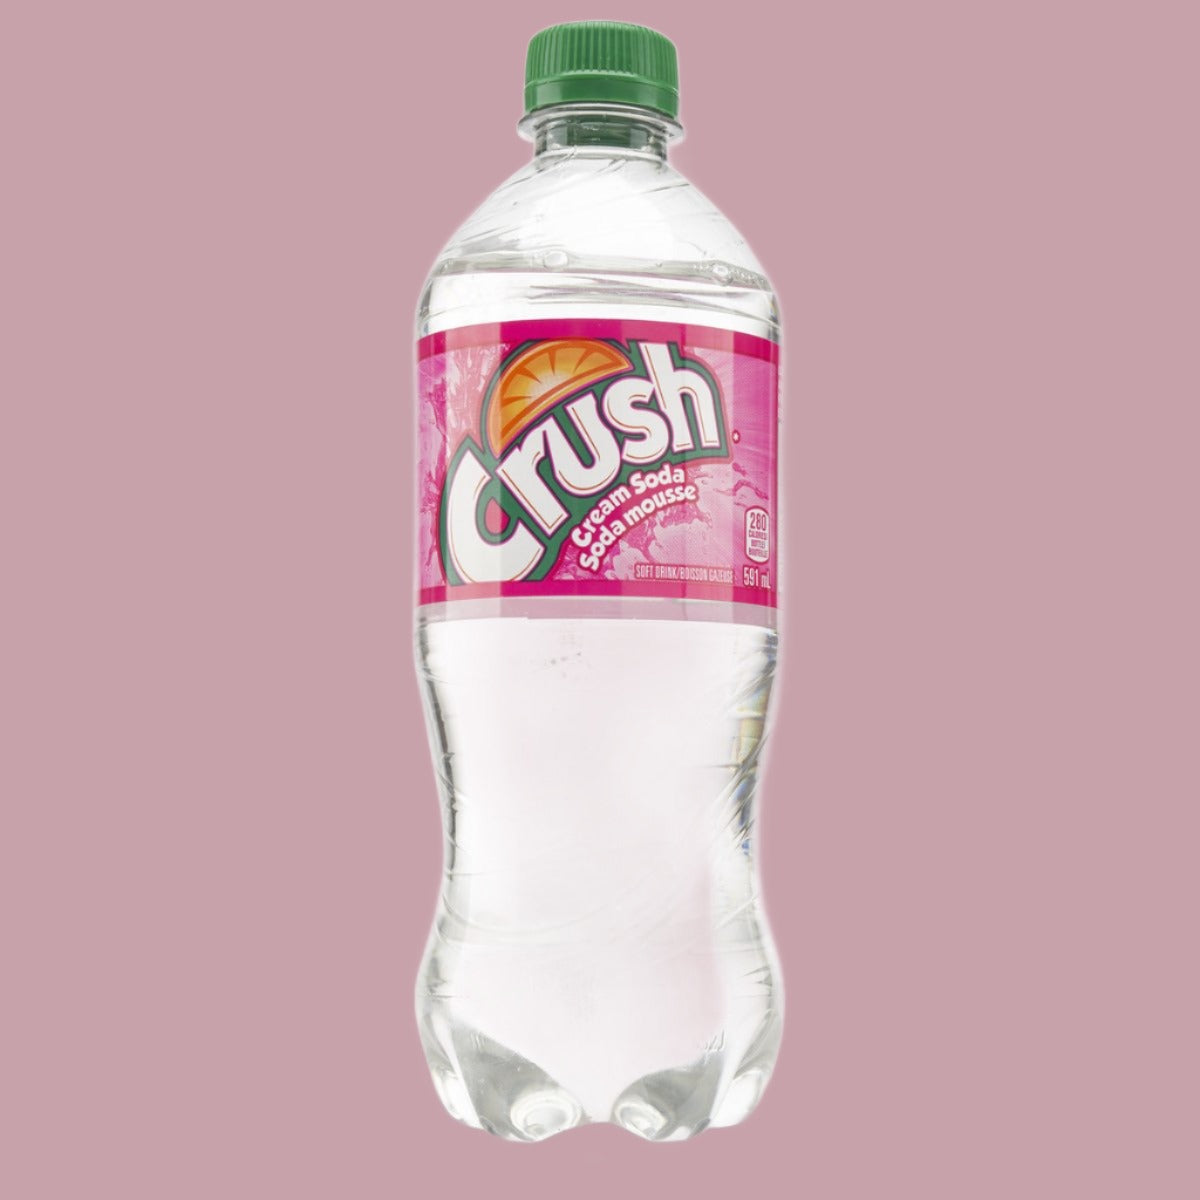 Crush Cream Soda 20 fl oz (Canada)